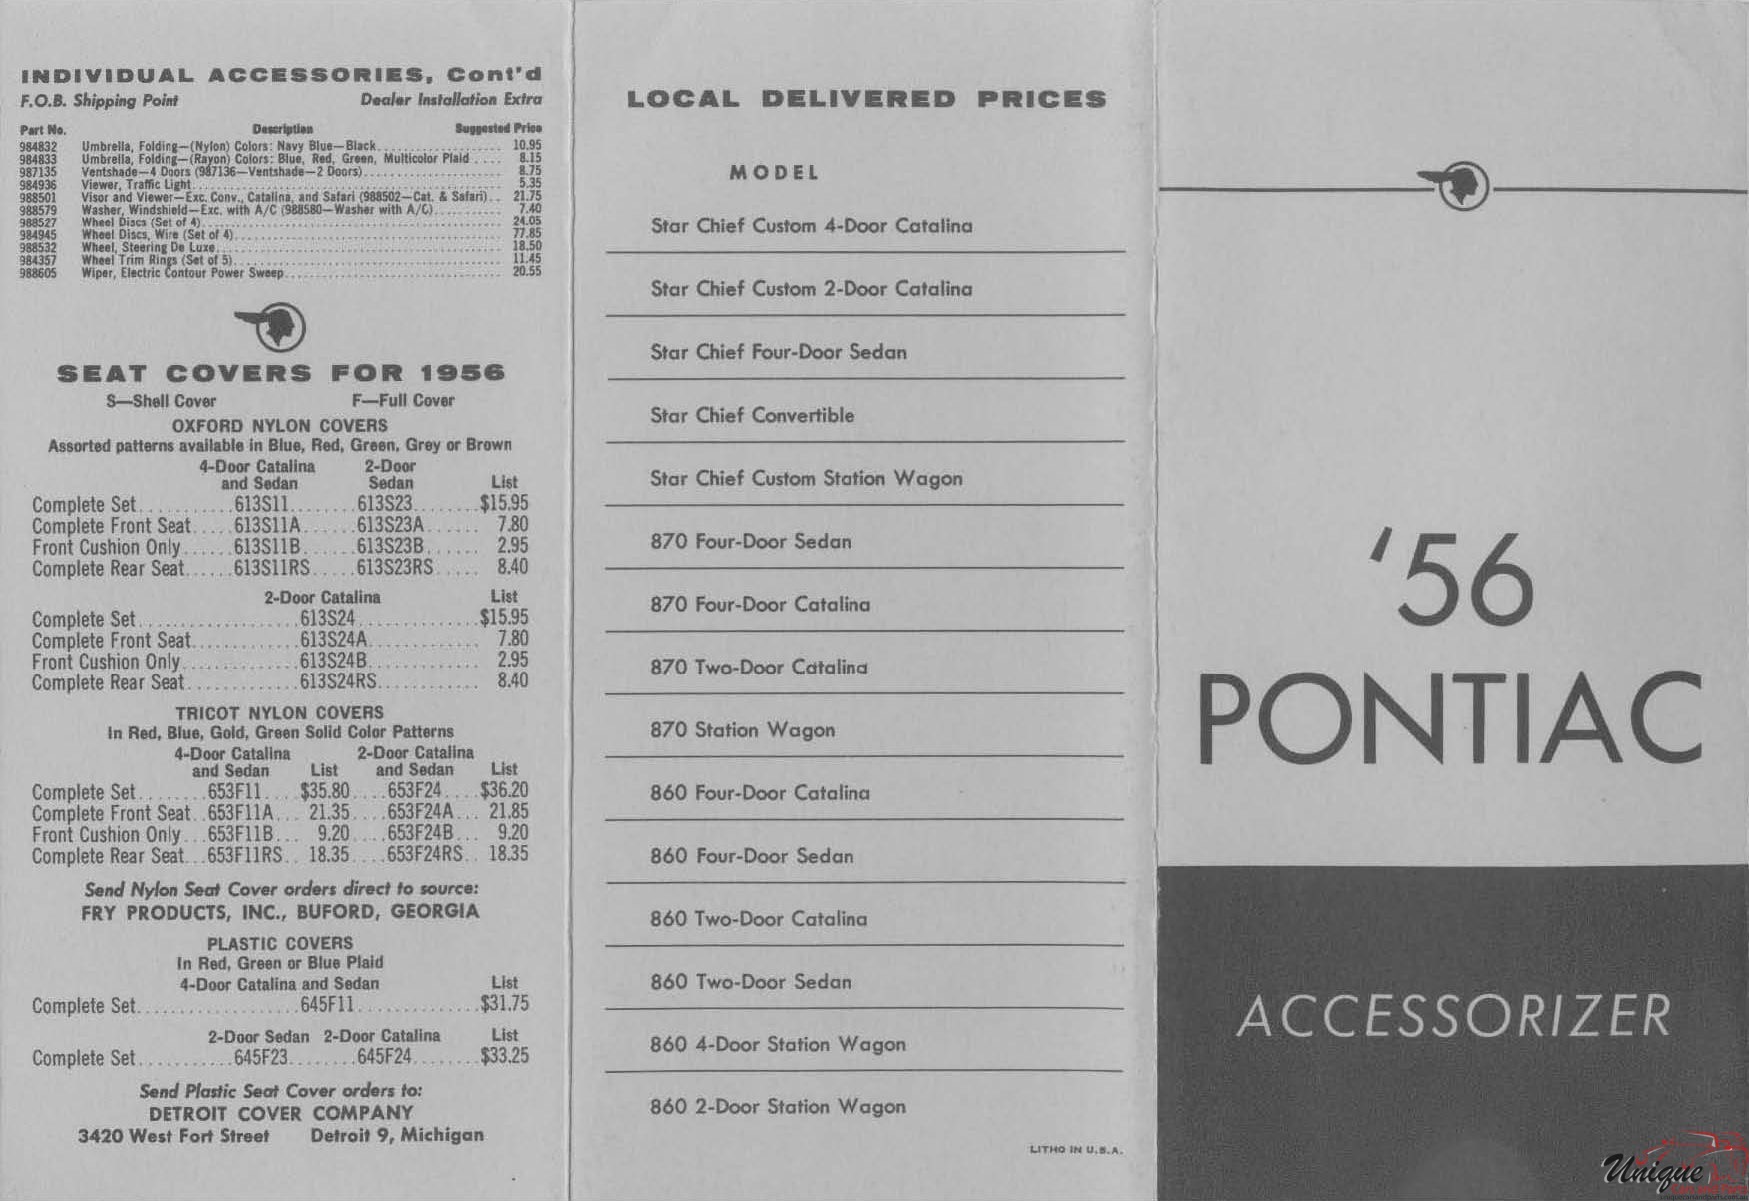 1956 Pontiac Accessorizer Brochure Page 2